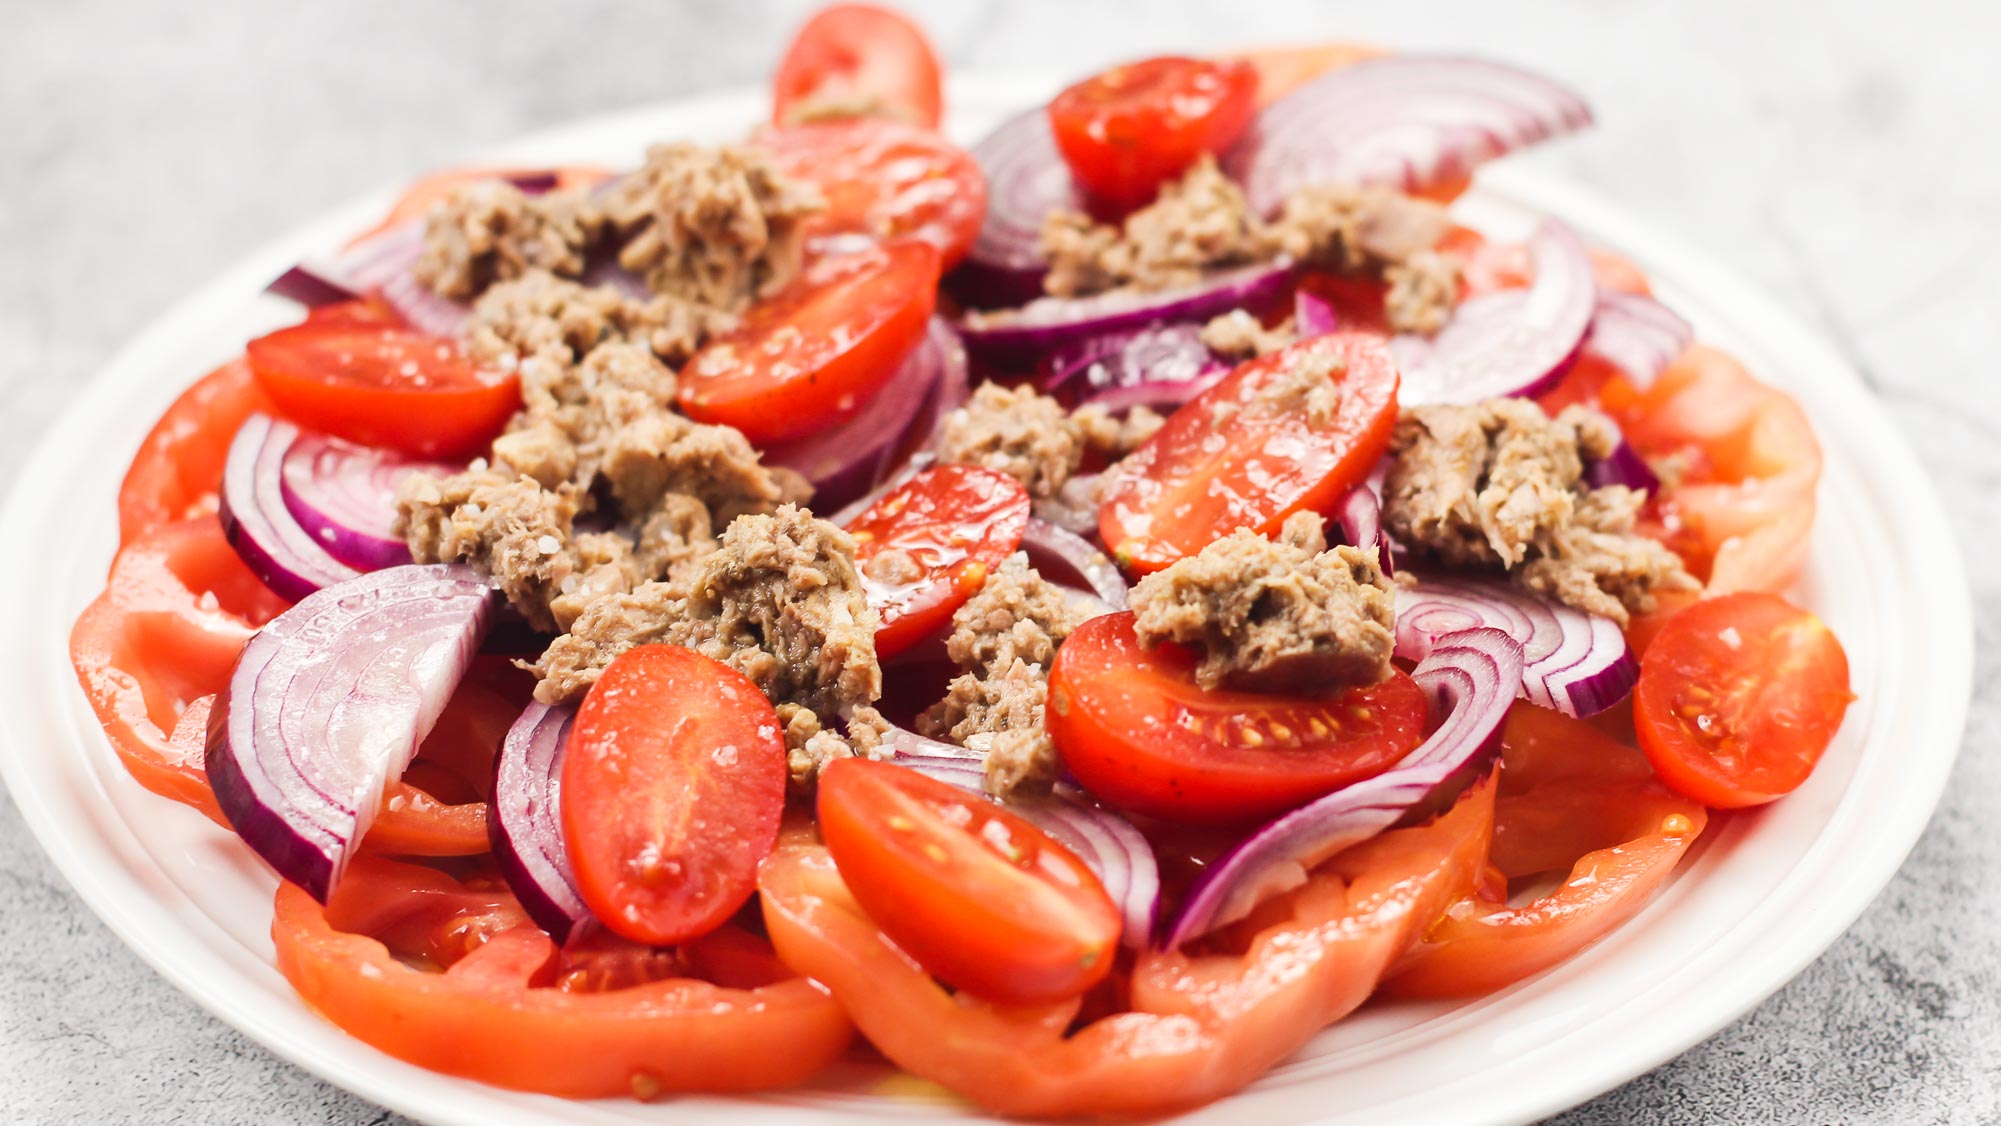 Tuna Tomato salad on a plate.